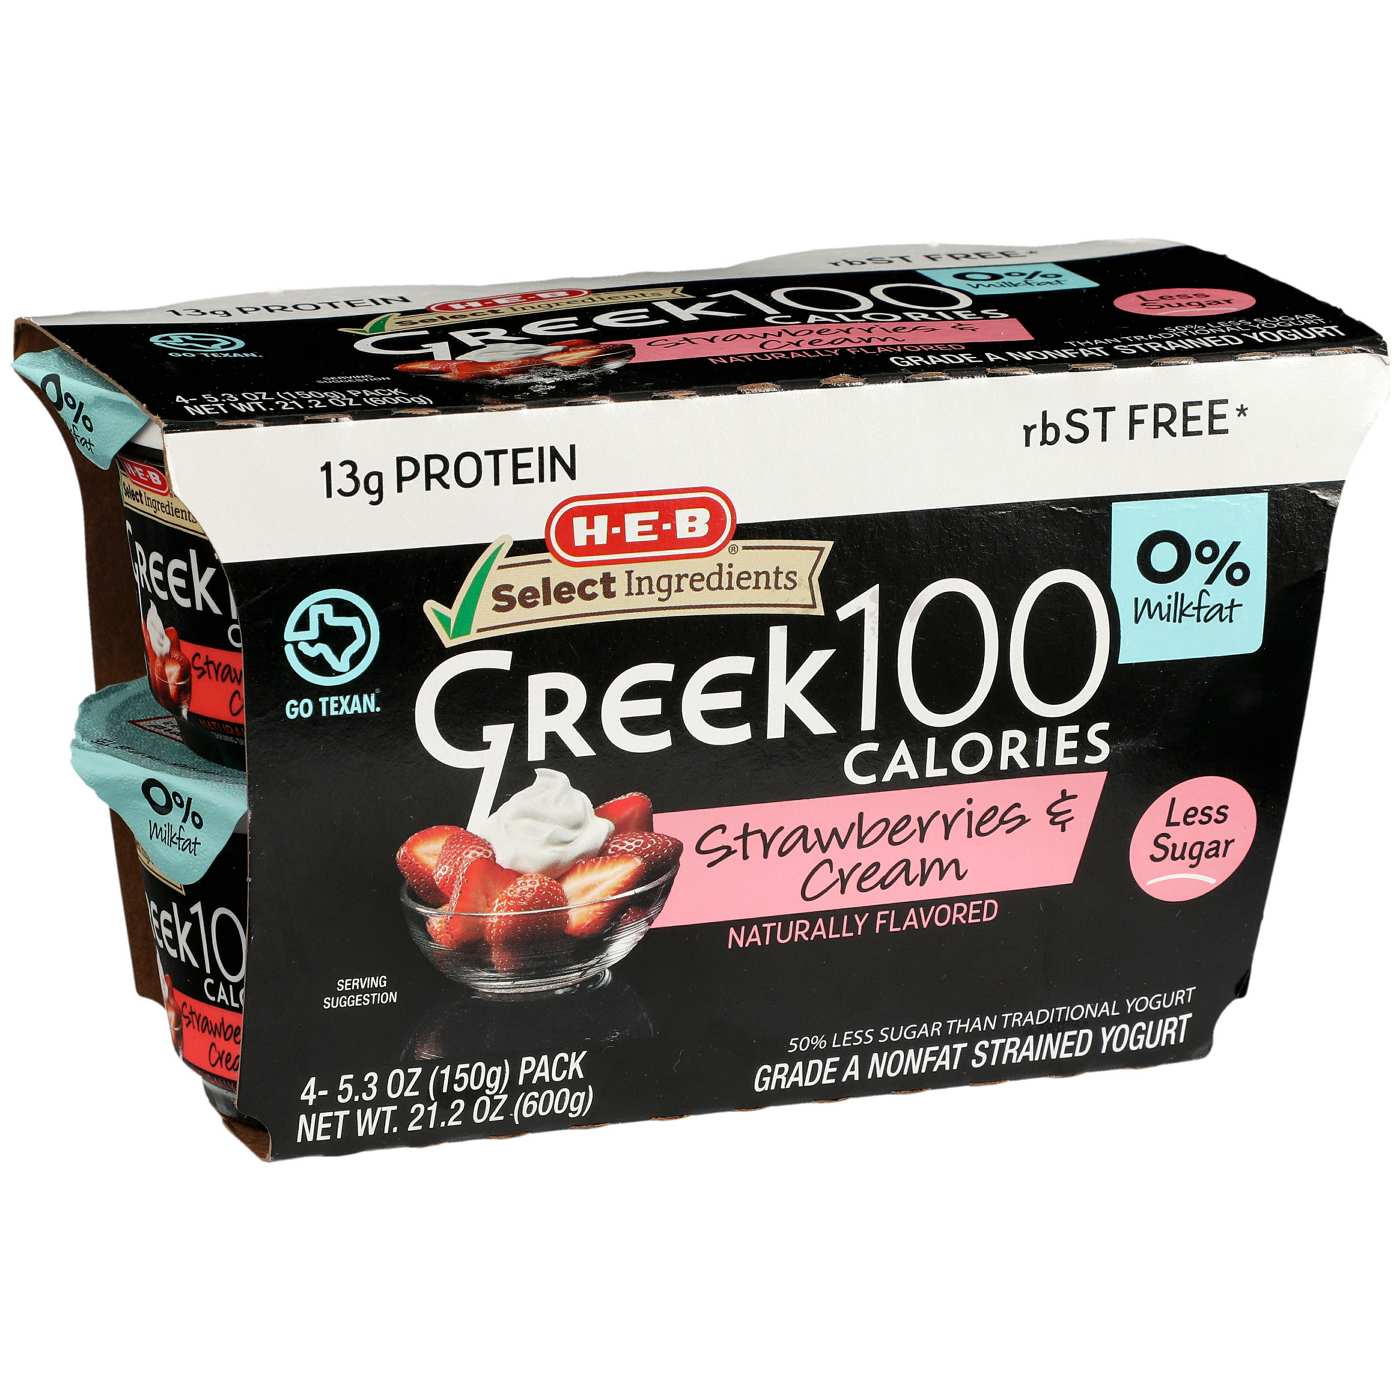 H-E-B 13g Protein Greek 100 Calories Nonfat Yogurt - Strawberries & Cream; image 1 of 2